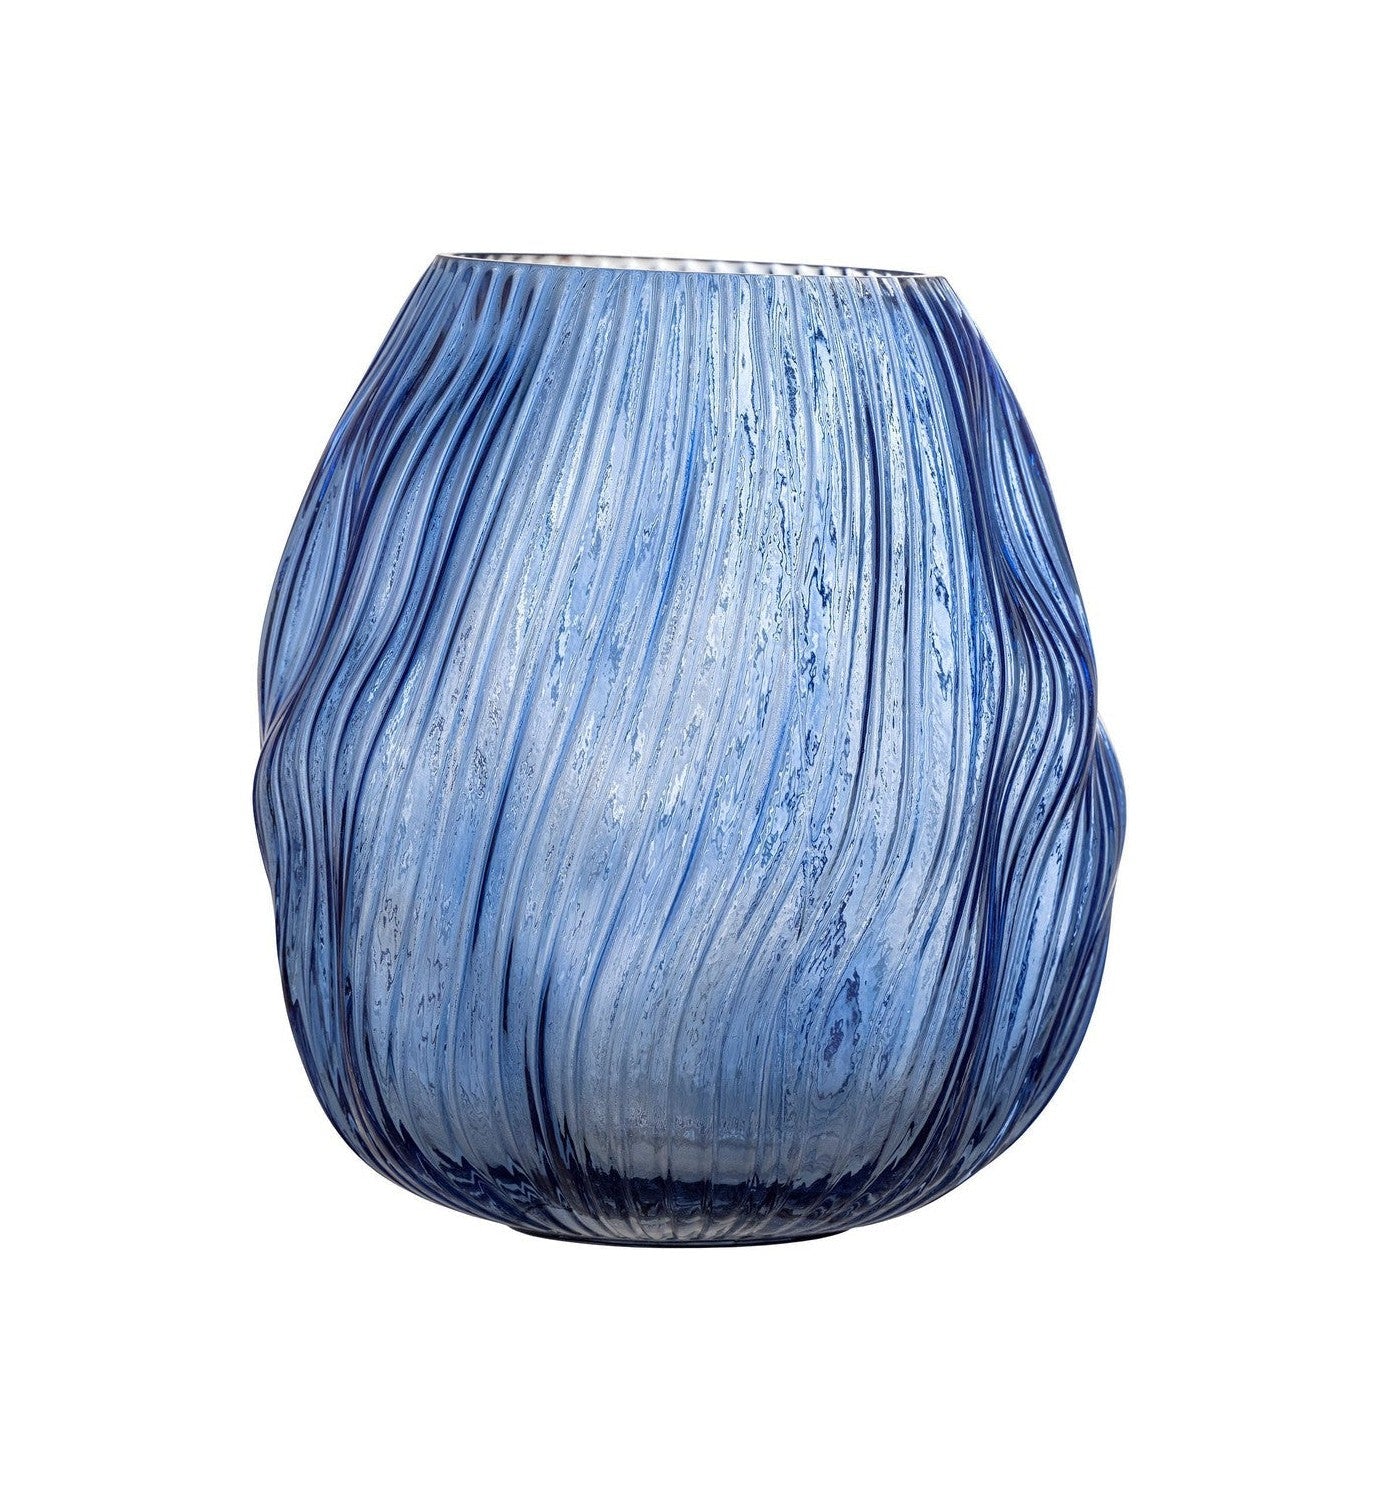 Creative Collection Leyla Vase, Blue, Glass